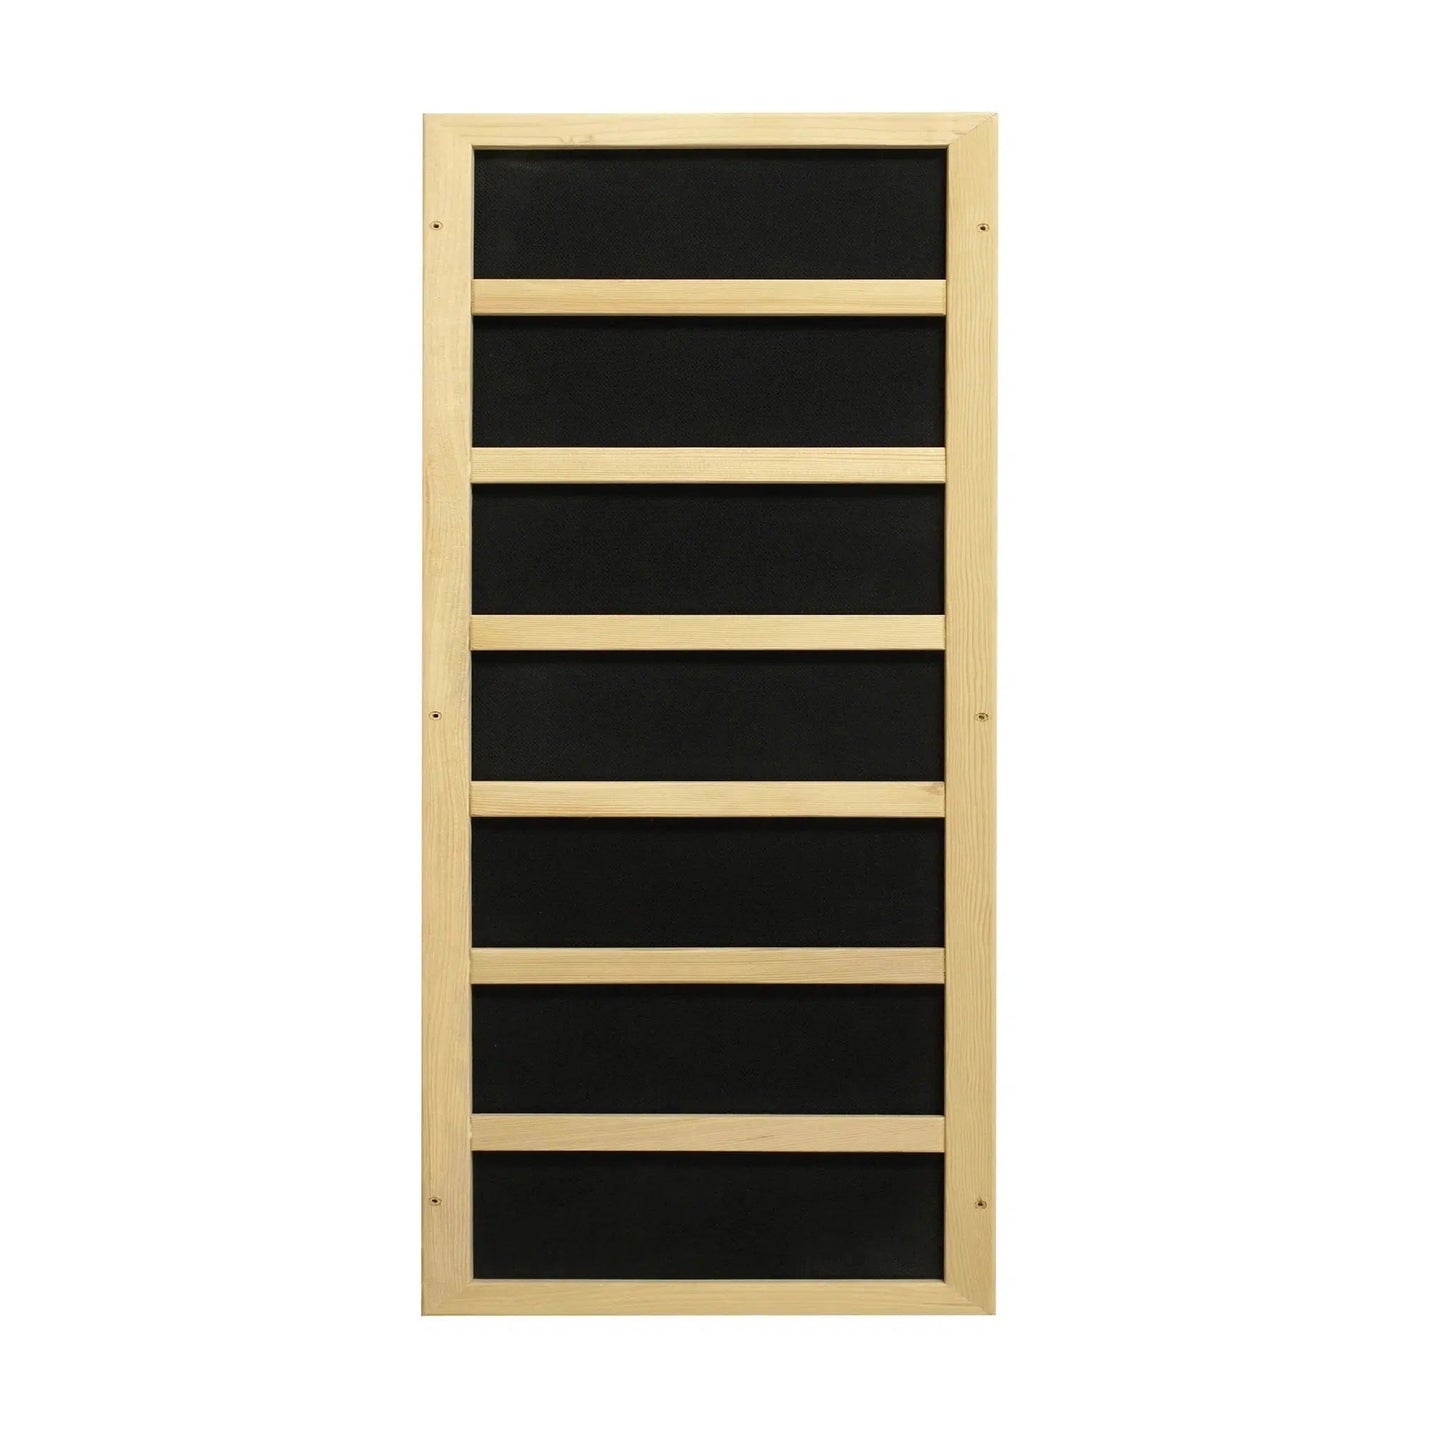 Golden Designs Dynamic Palermo 3-Person Low EMF FAR Infrared Carbon Sauna in Canadian Hemlock